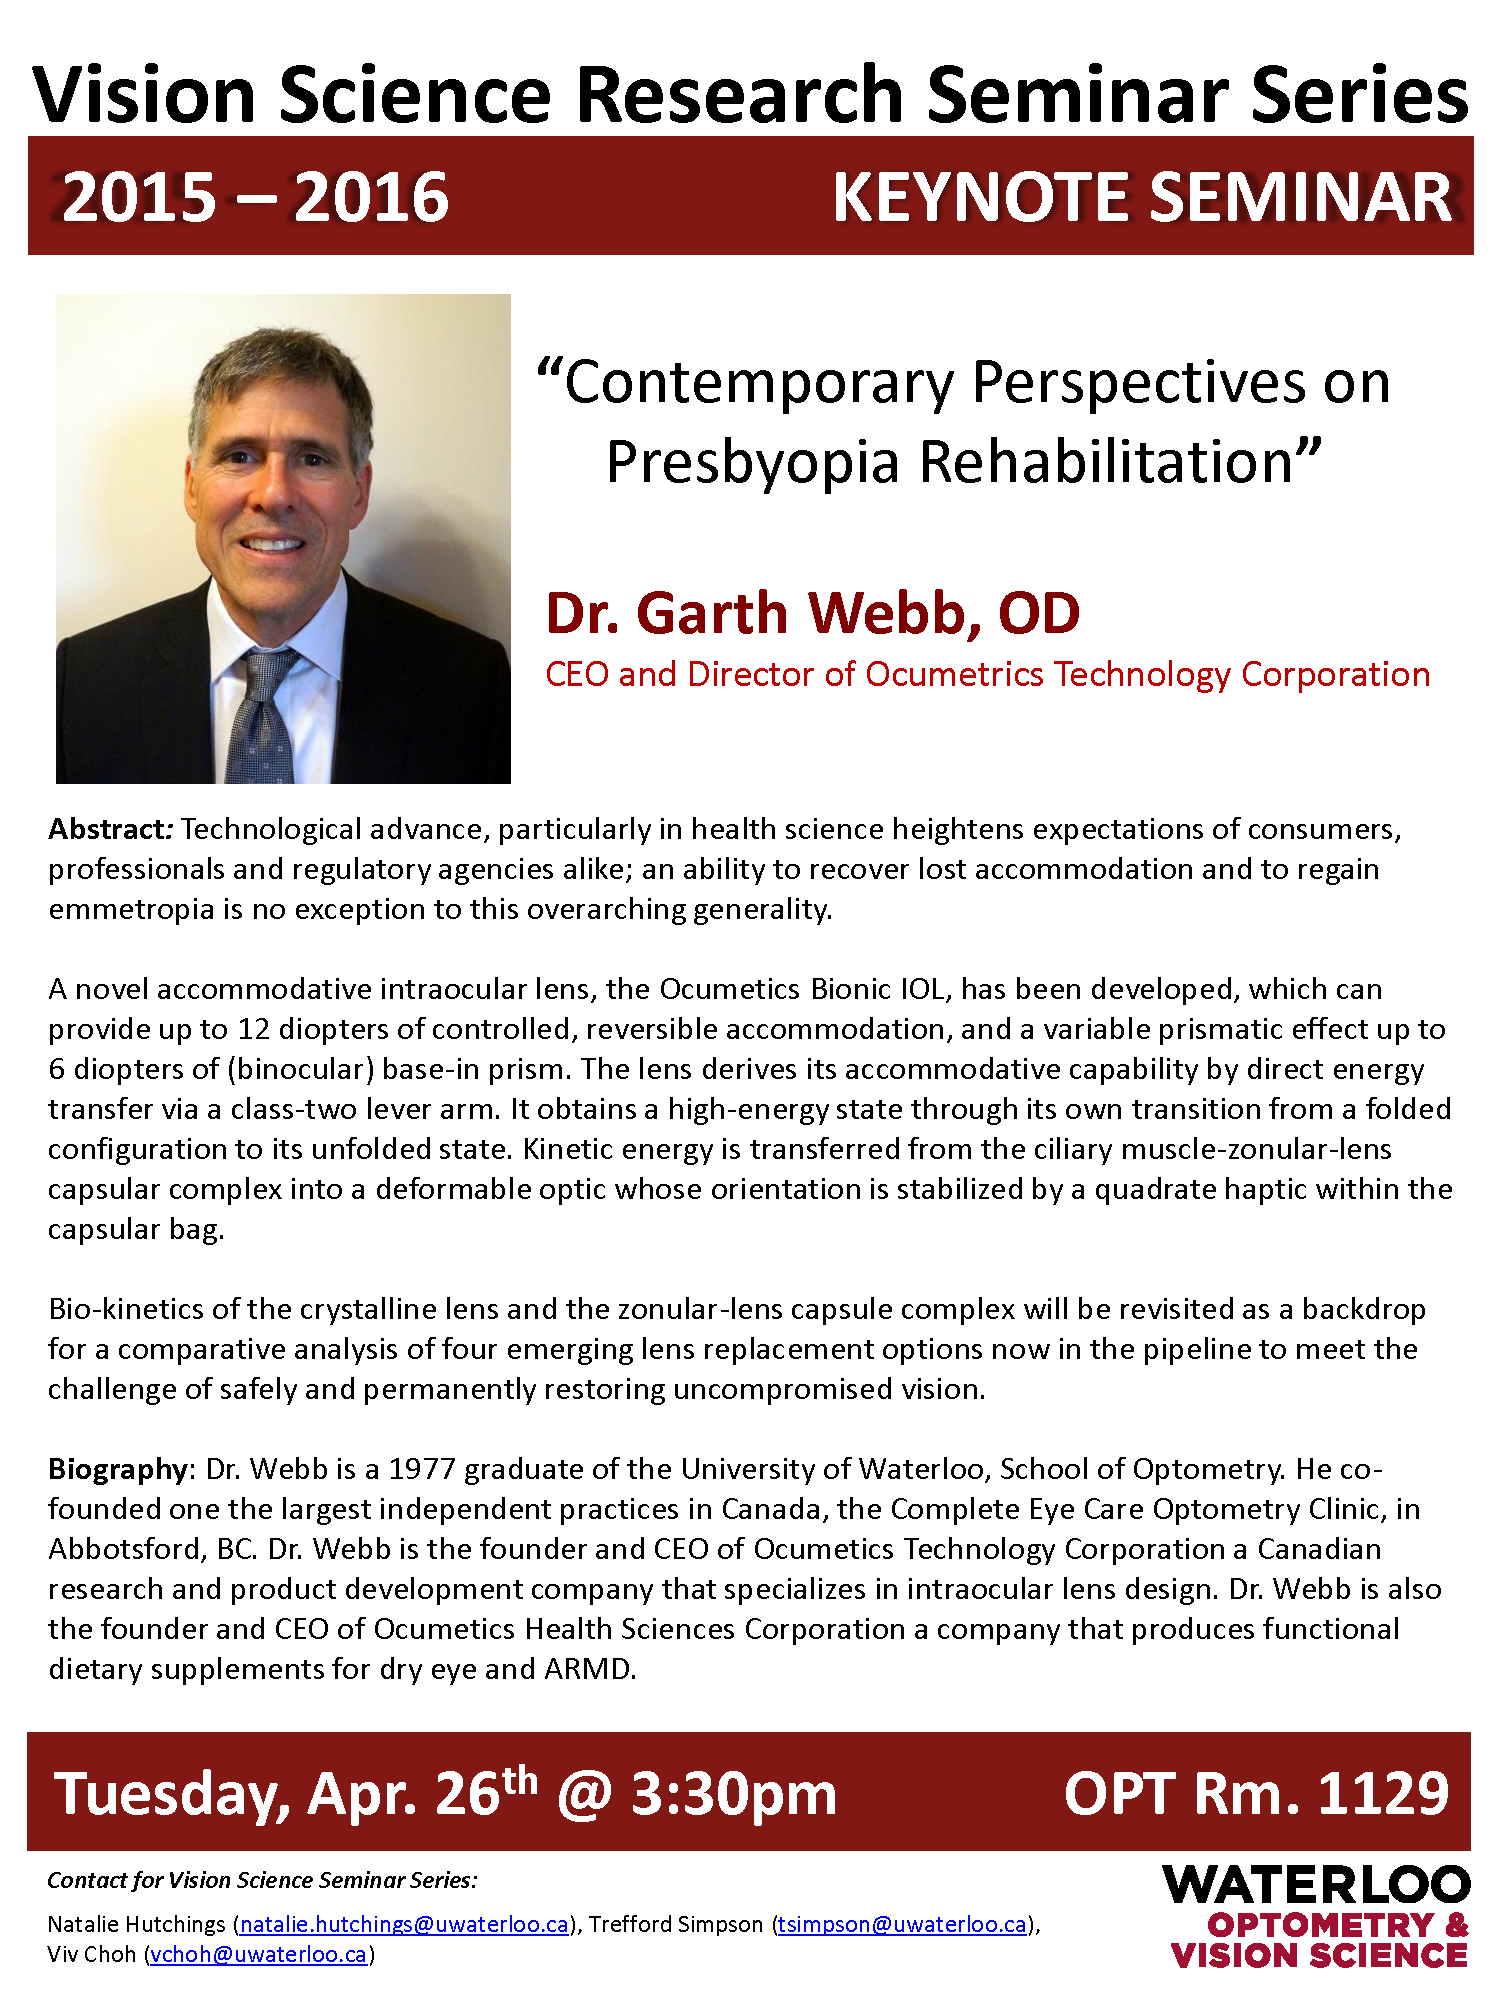 Poster for Dr. Garth Webb talk